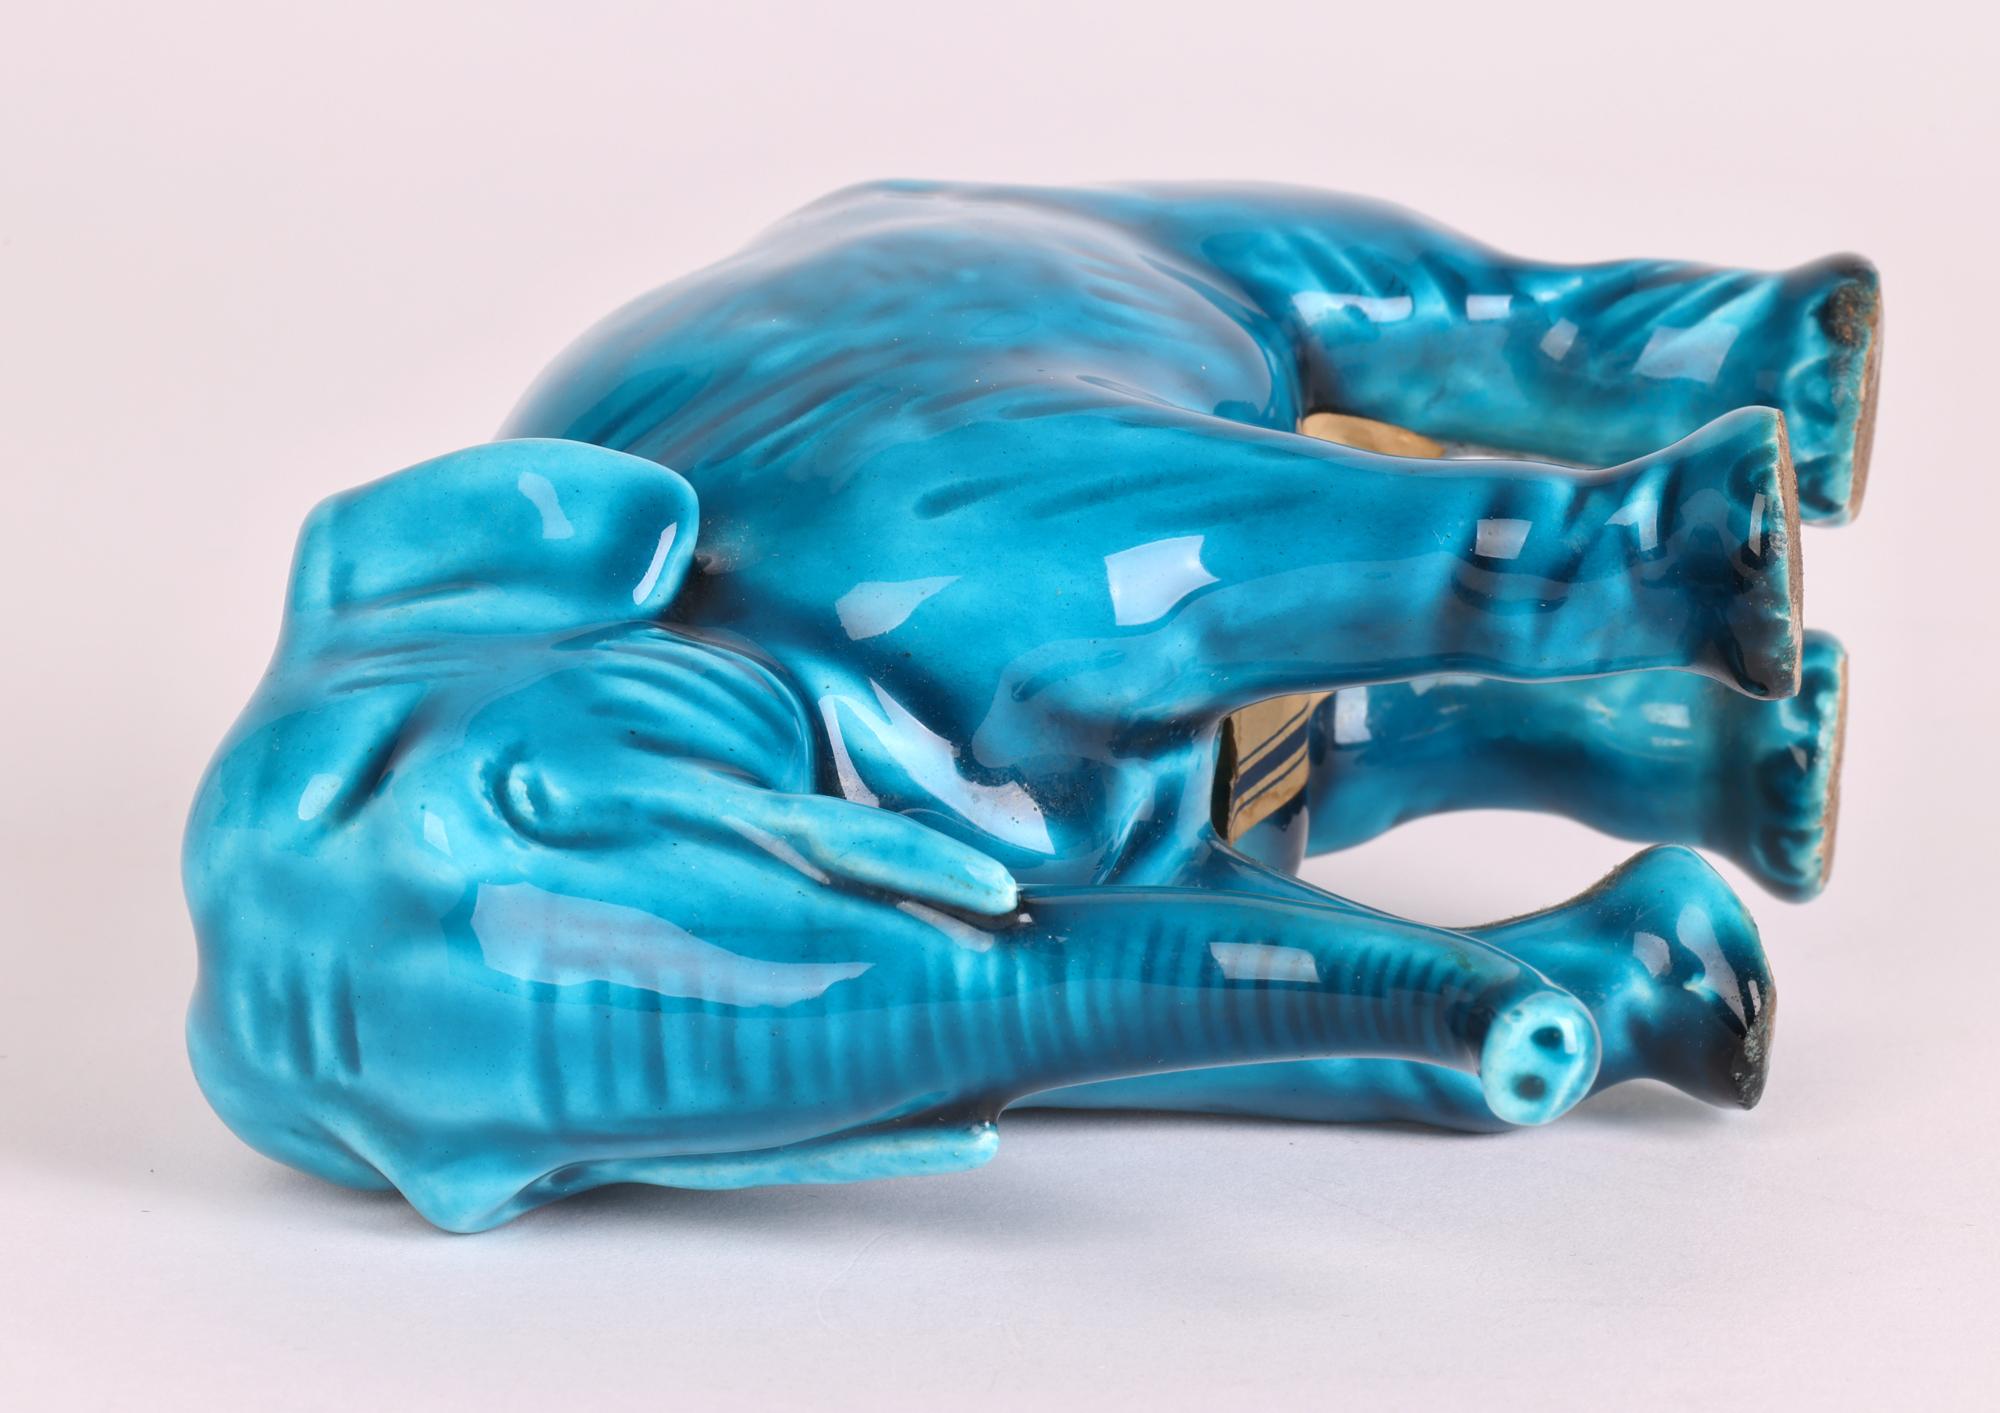 Paul Milet Sevres Turquoise Glazed Ceramic Elephant Figure    For Sale 2